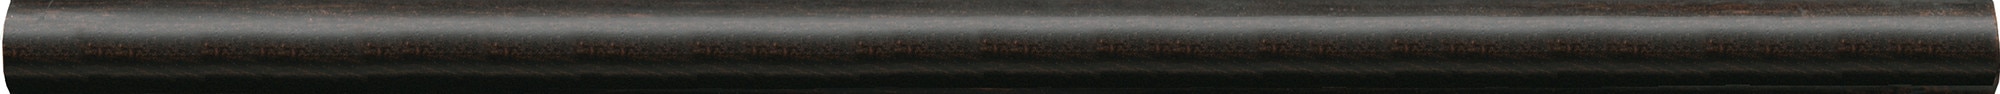 Oil Rub Bronze, Pencil Liner, 1/2X12, Sa